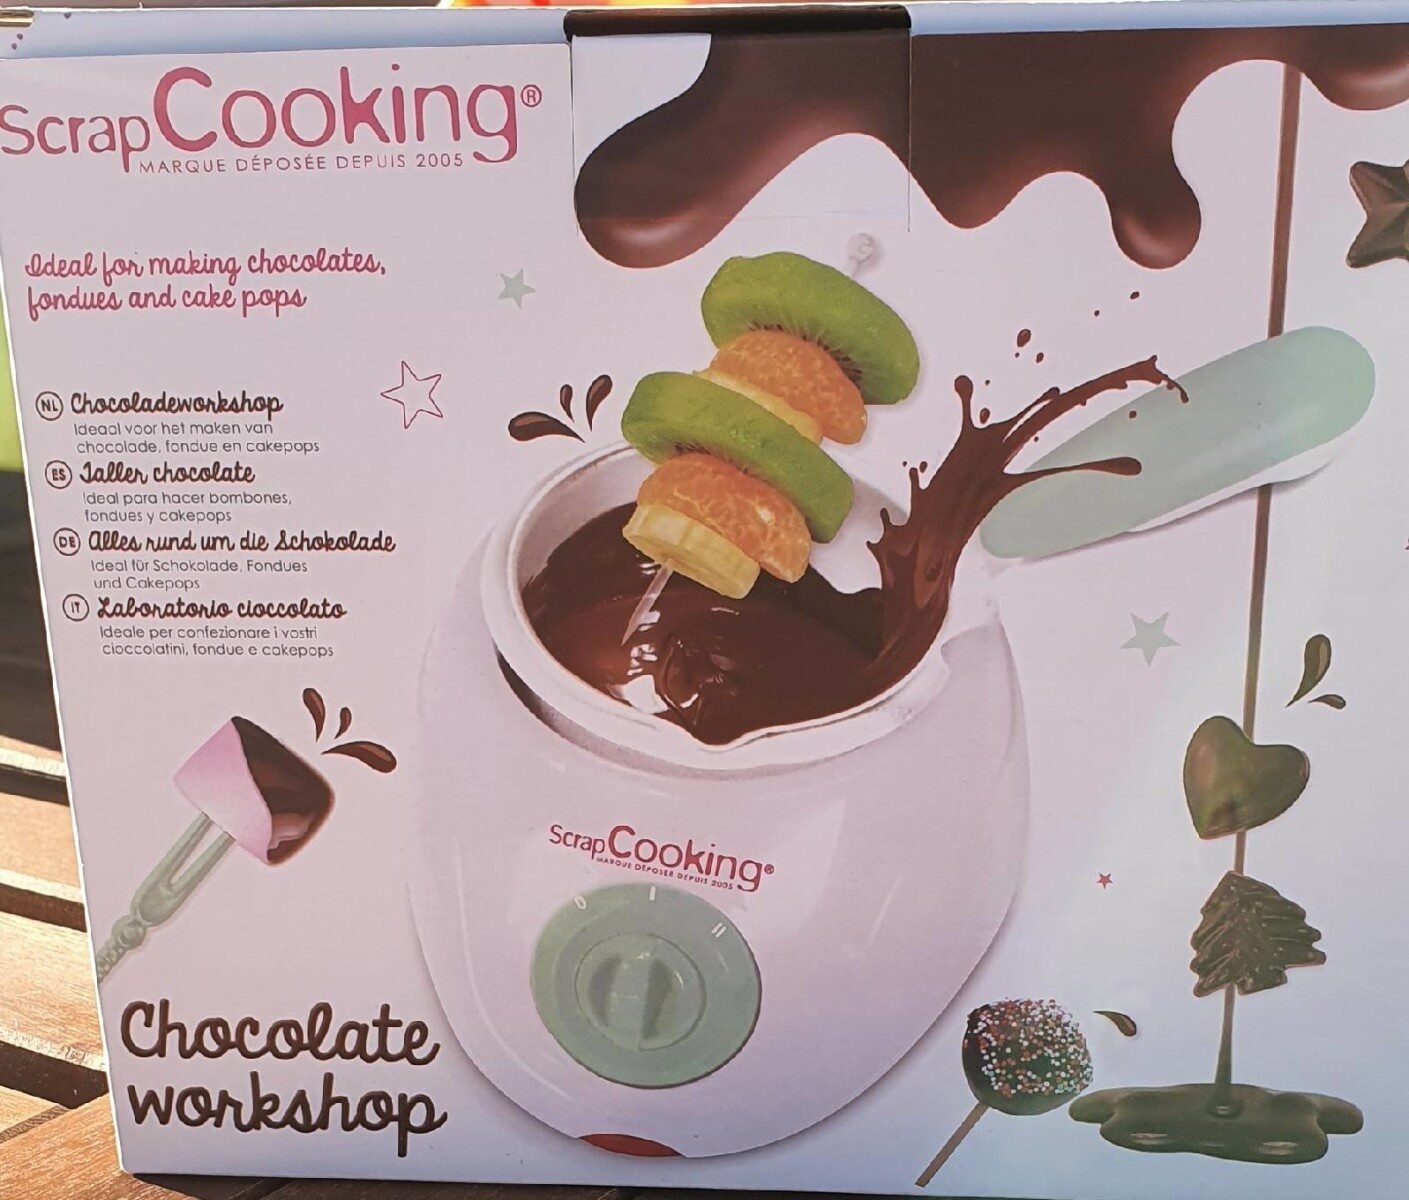 Chocolatière - Atelier Chocolat - Scrapcooking - Product - hu